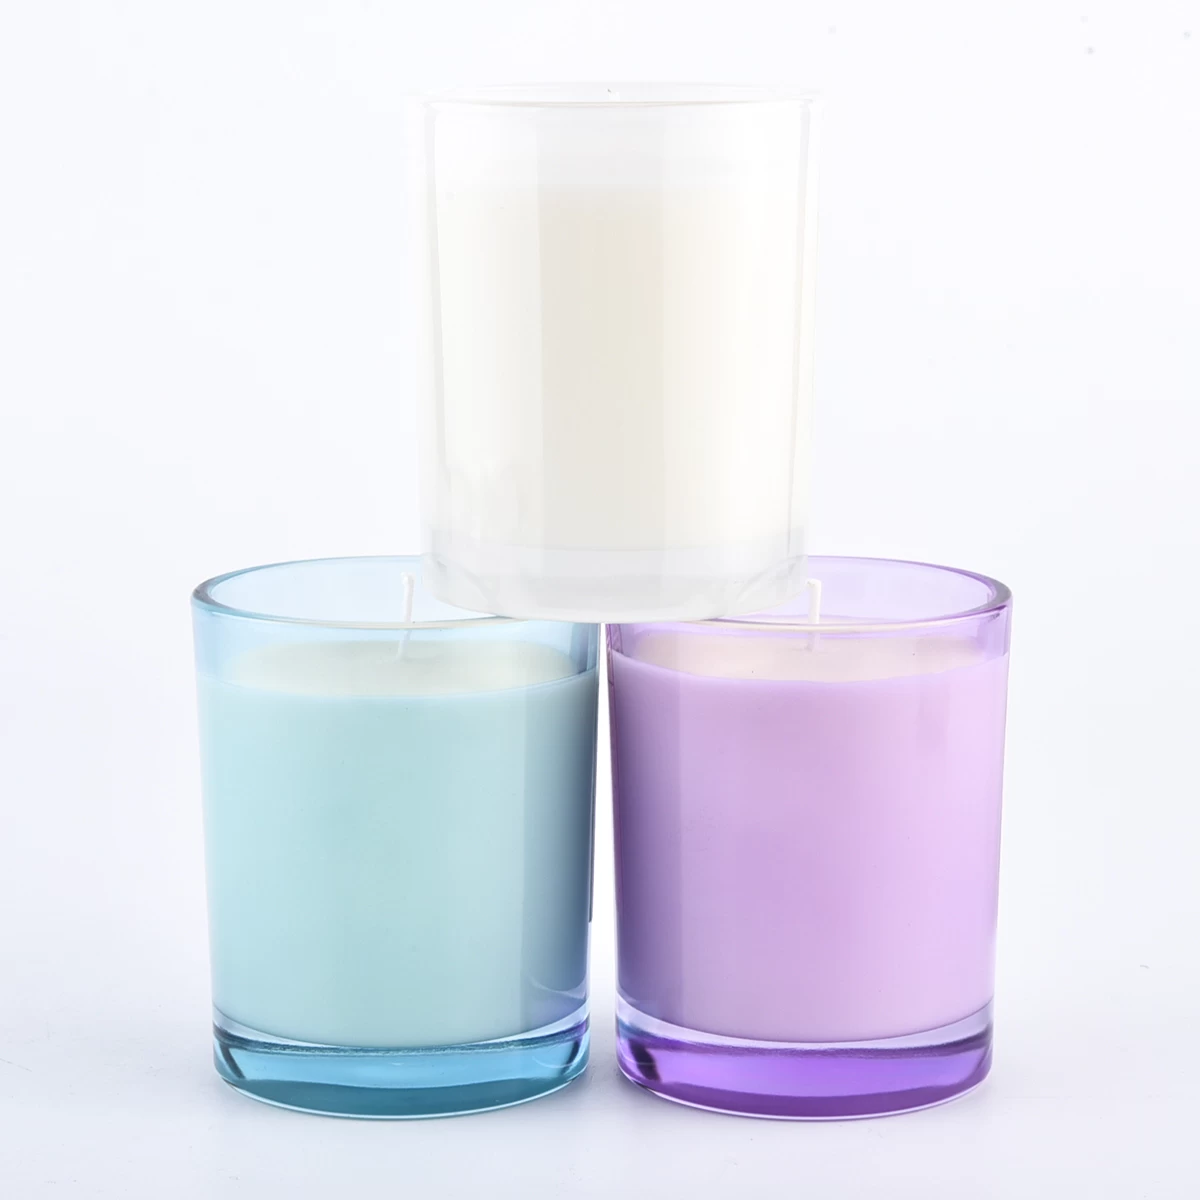 8oz popular glass candle vessels costom colors